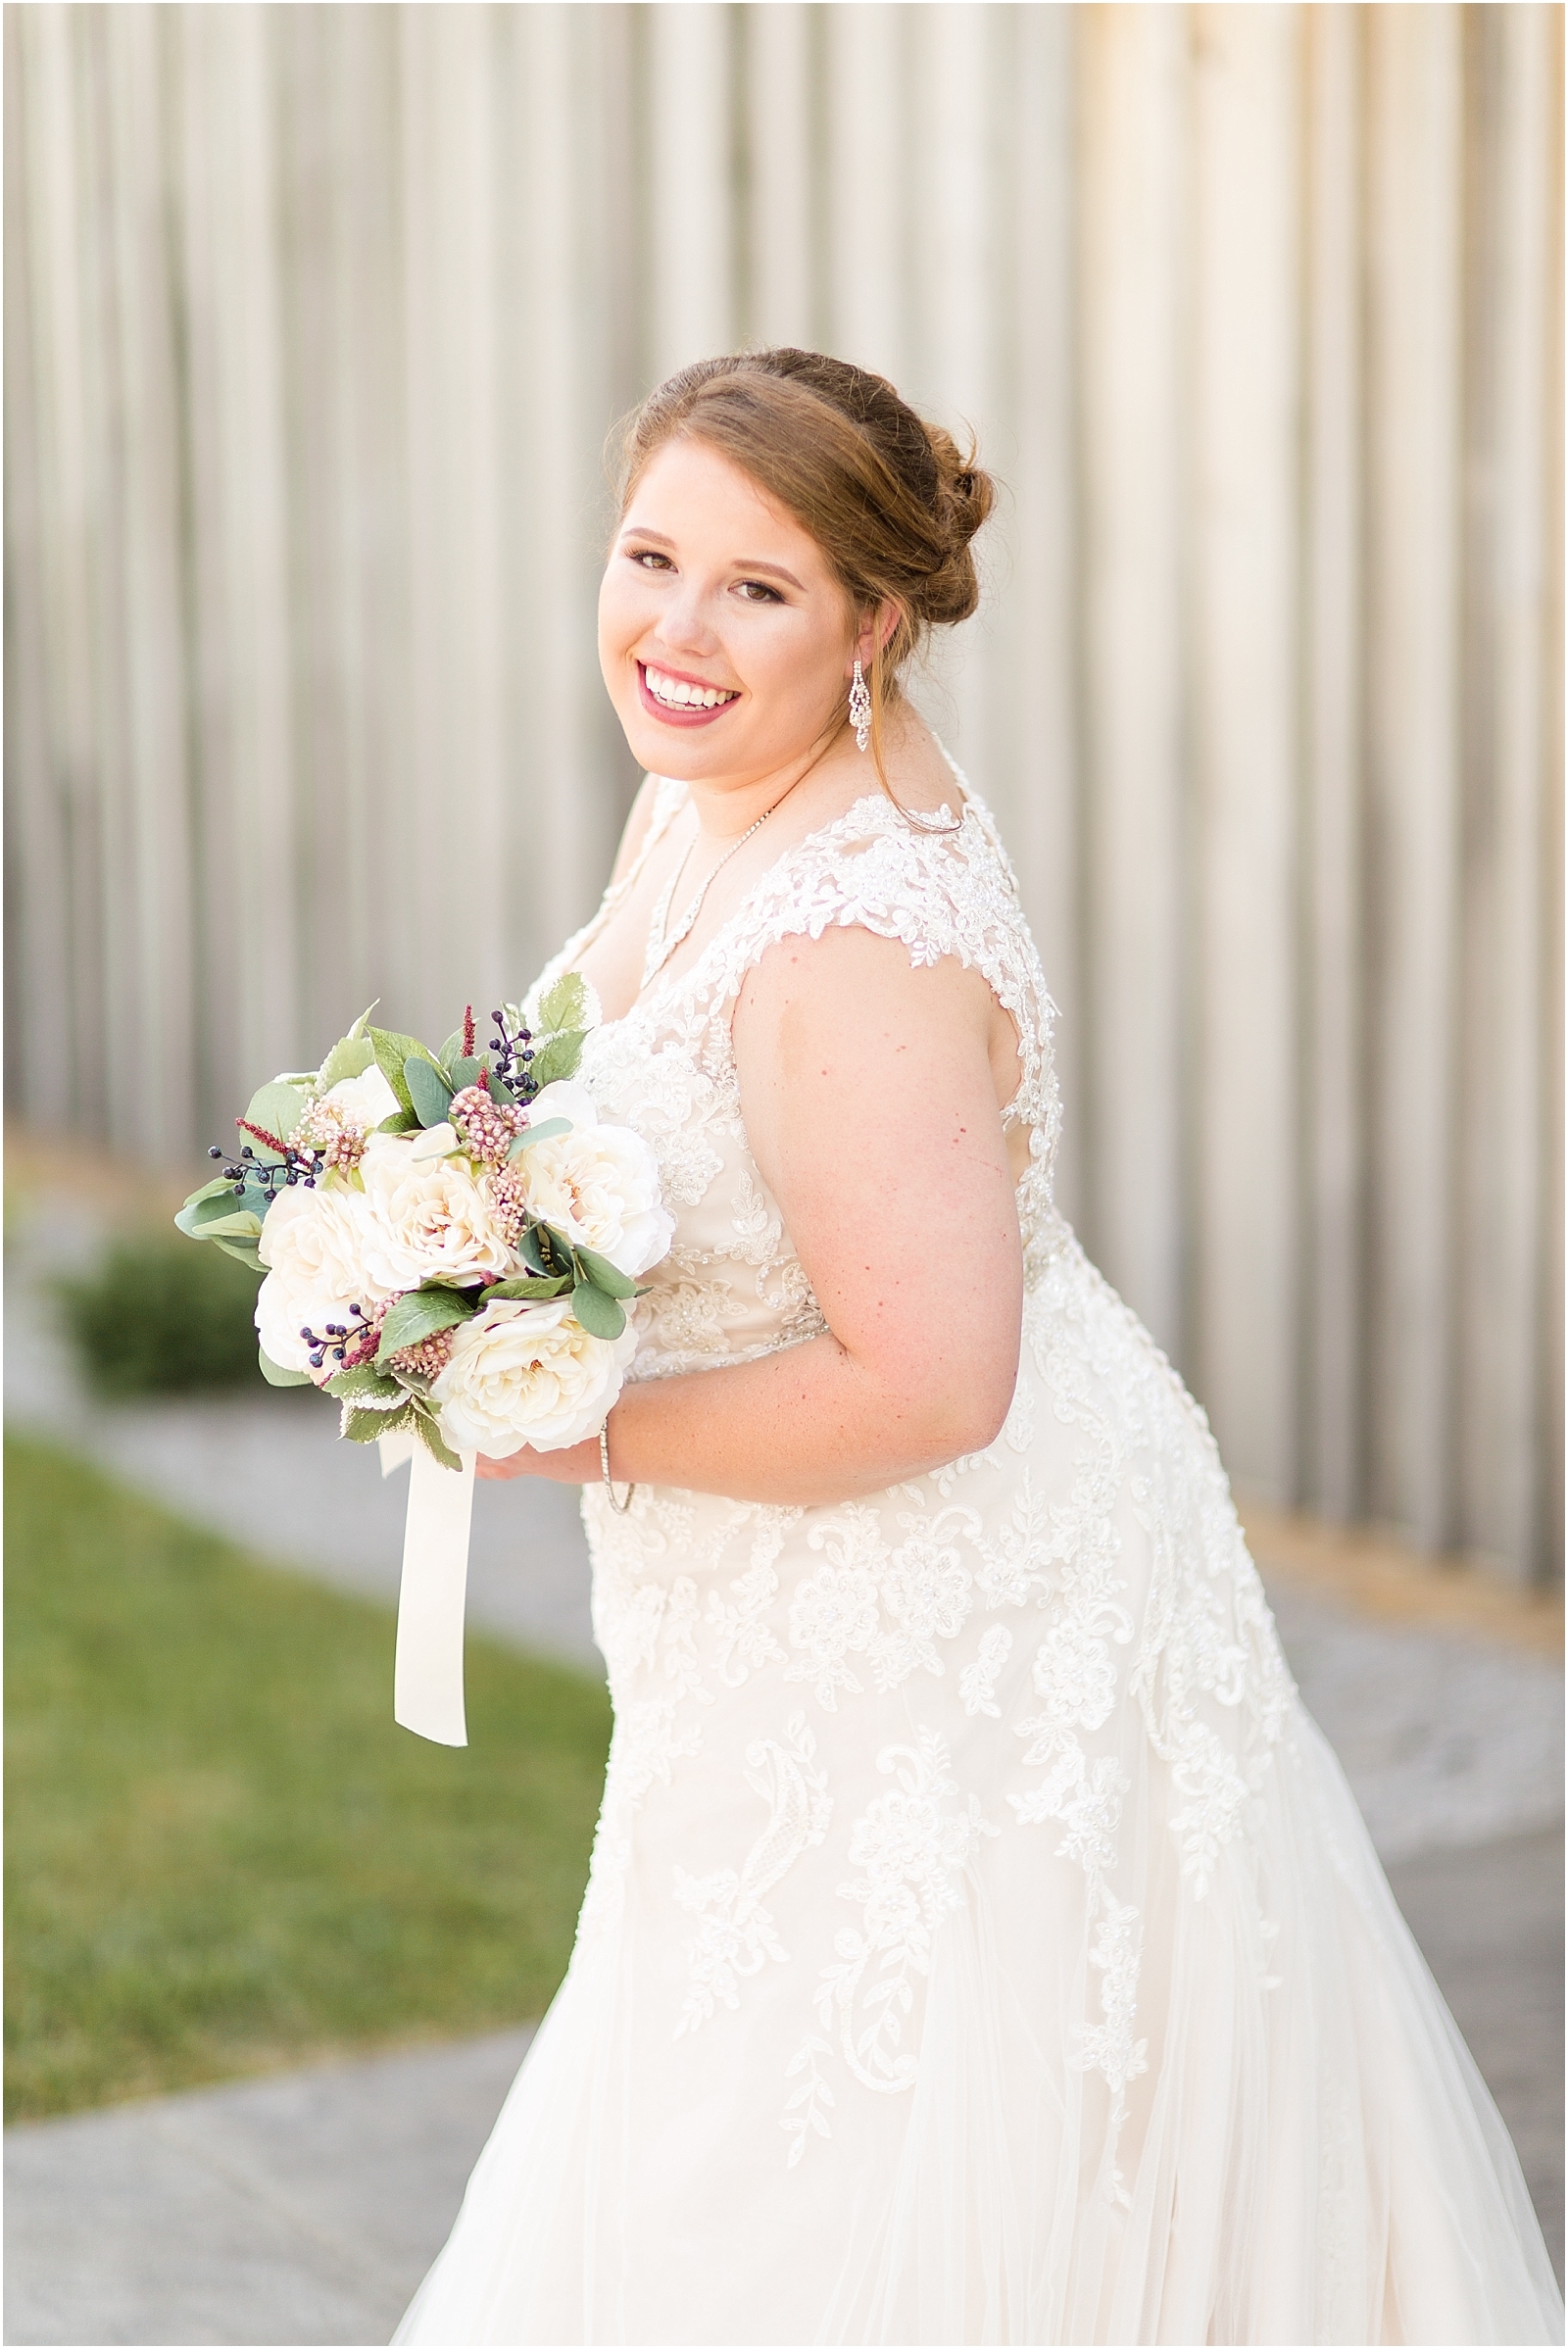 Rachel and Michael | Bret and Brandie Photography | Evansville Wedding Photographers 0023.jpg